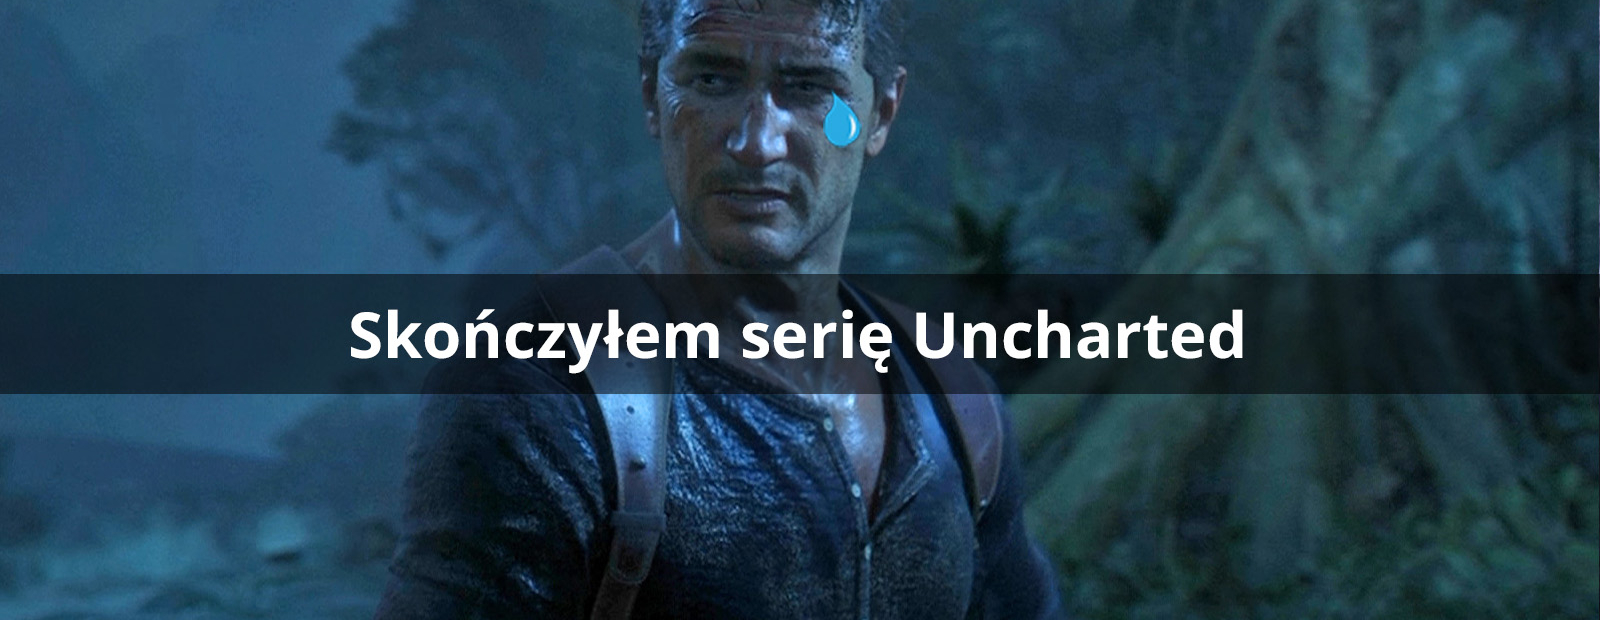 uncharted koniec2